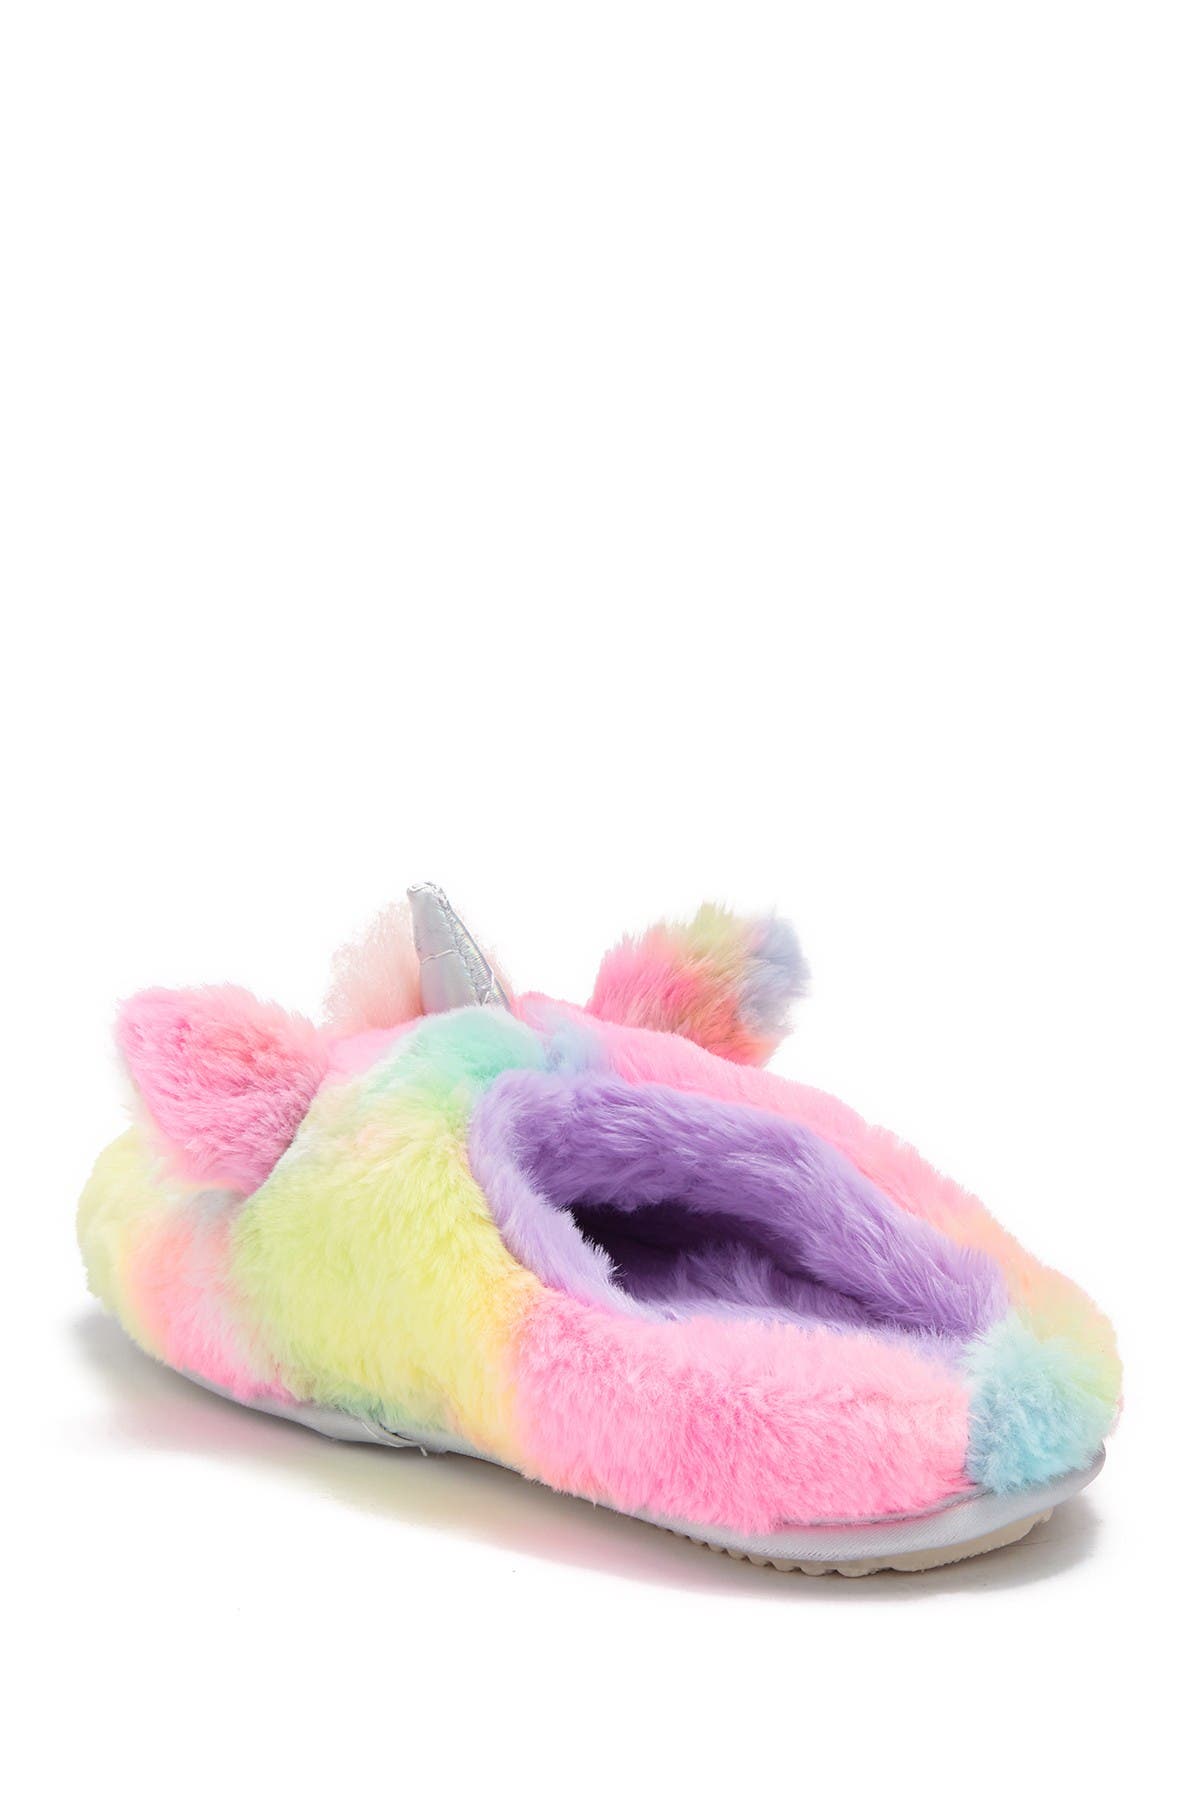 nordstrom unicorn slippers